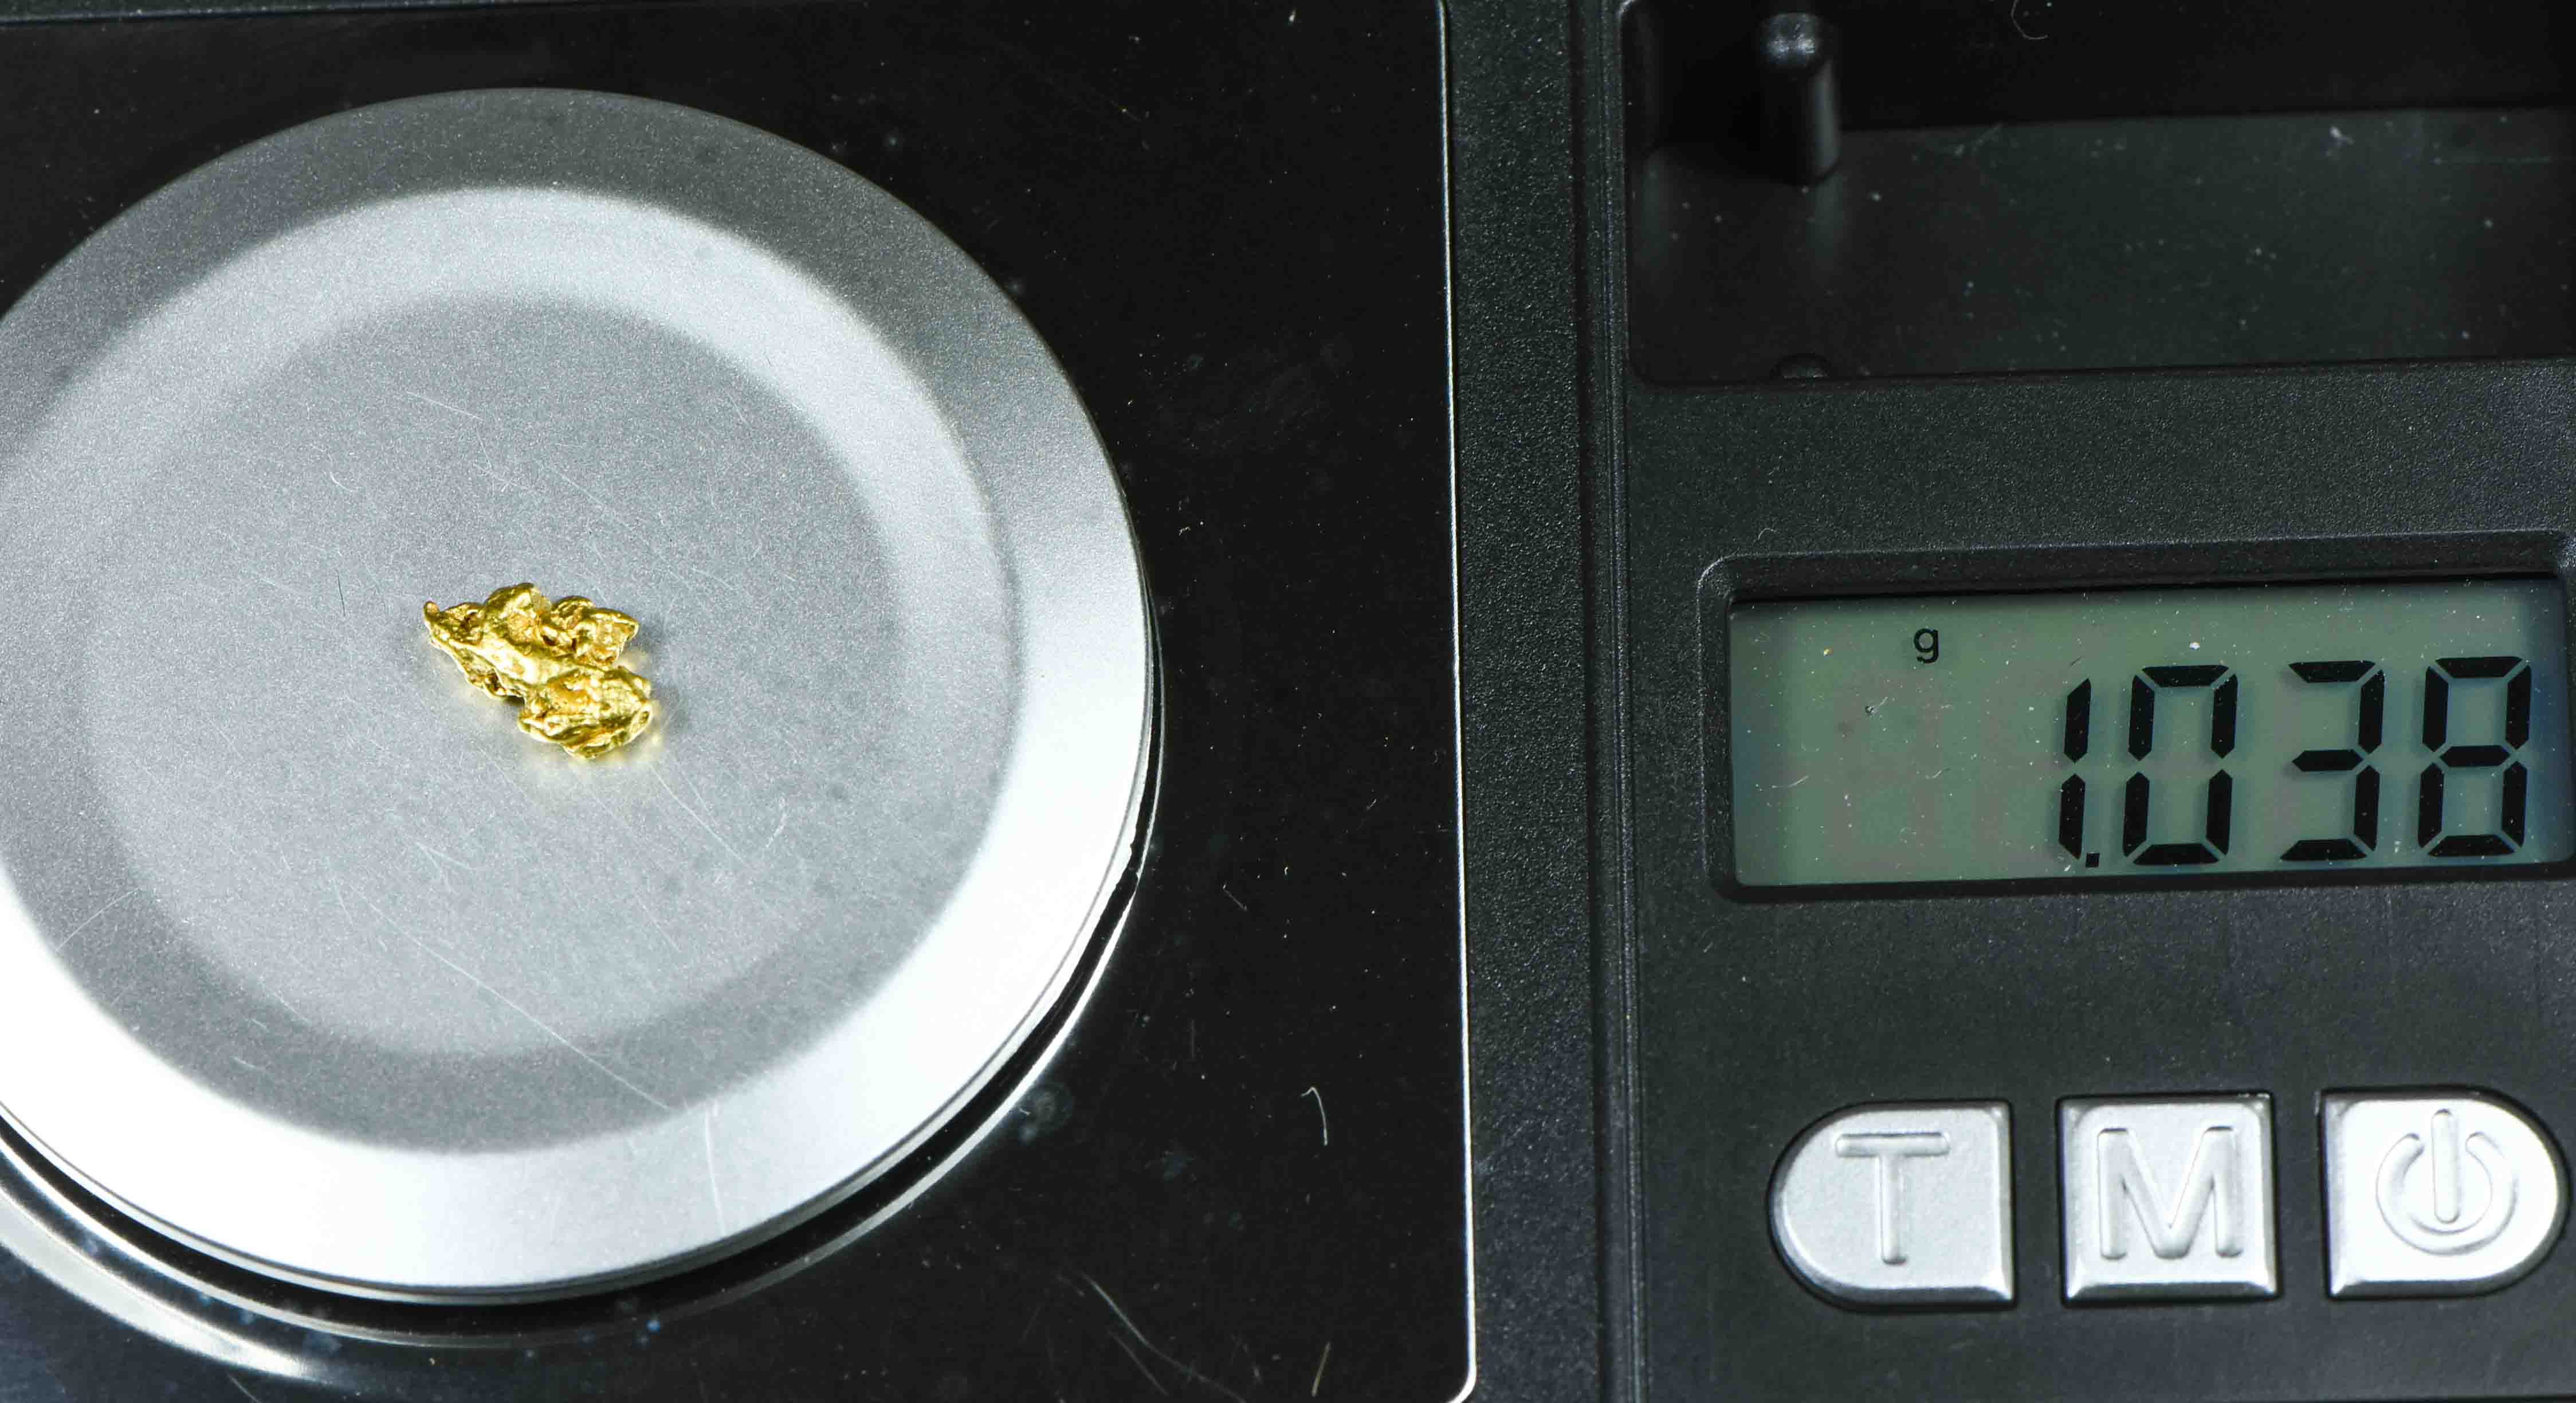 #76 Natural Gold Nugget Montana 1.03 Grams Genuine